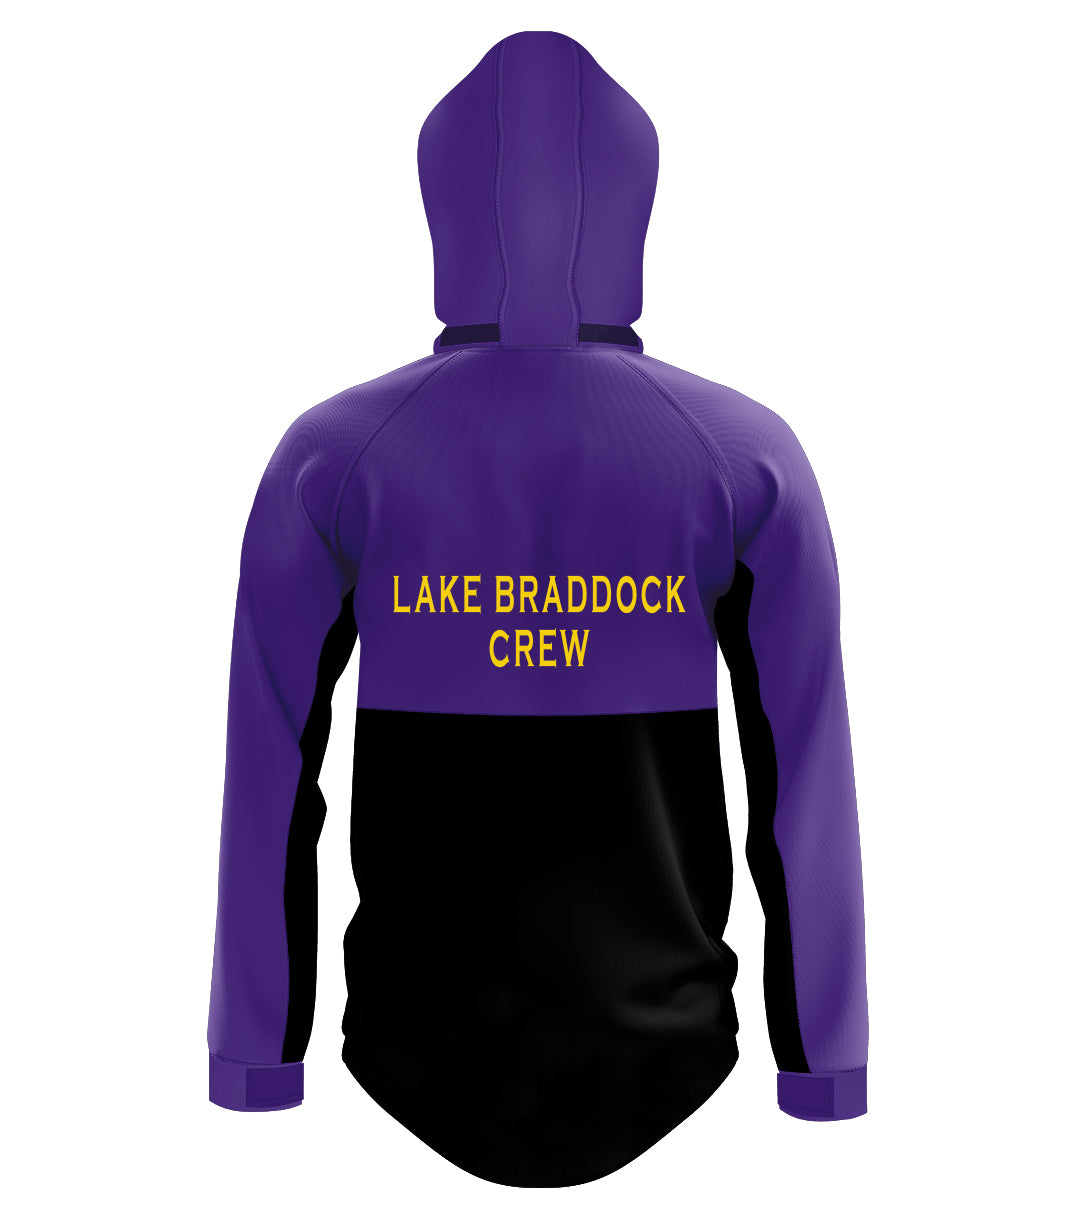 Lake Braddock Crew HydroTex Elite Performance Jacket